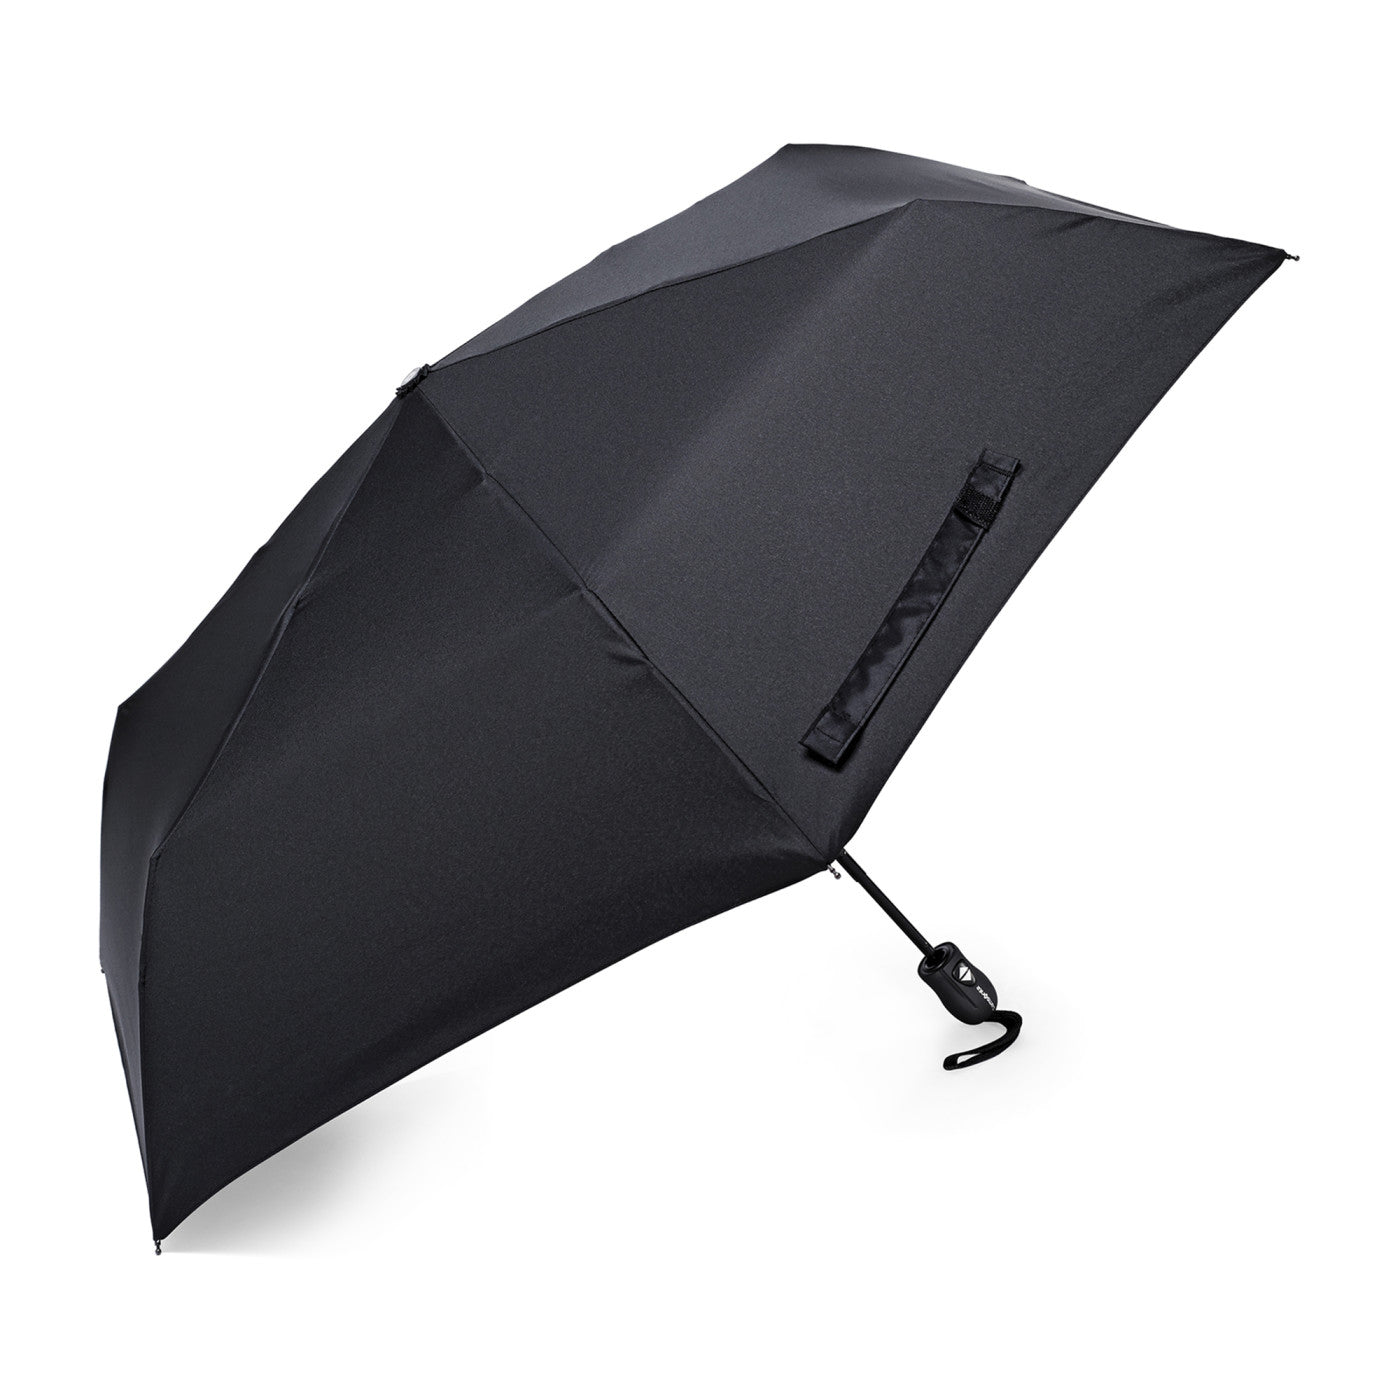 Samsonite - Compact Auto Open/Close Umbrella